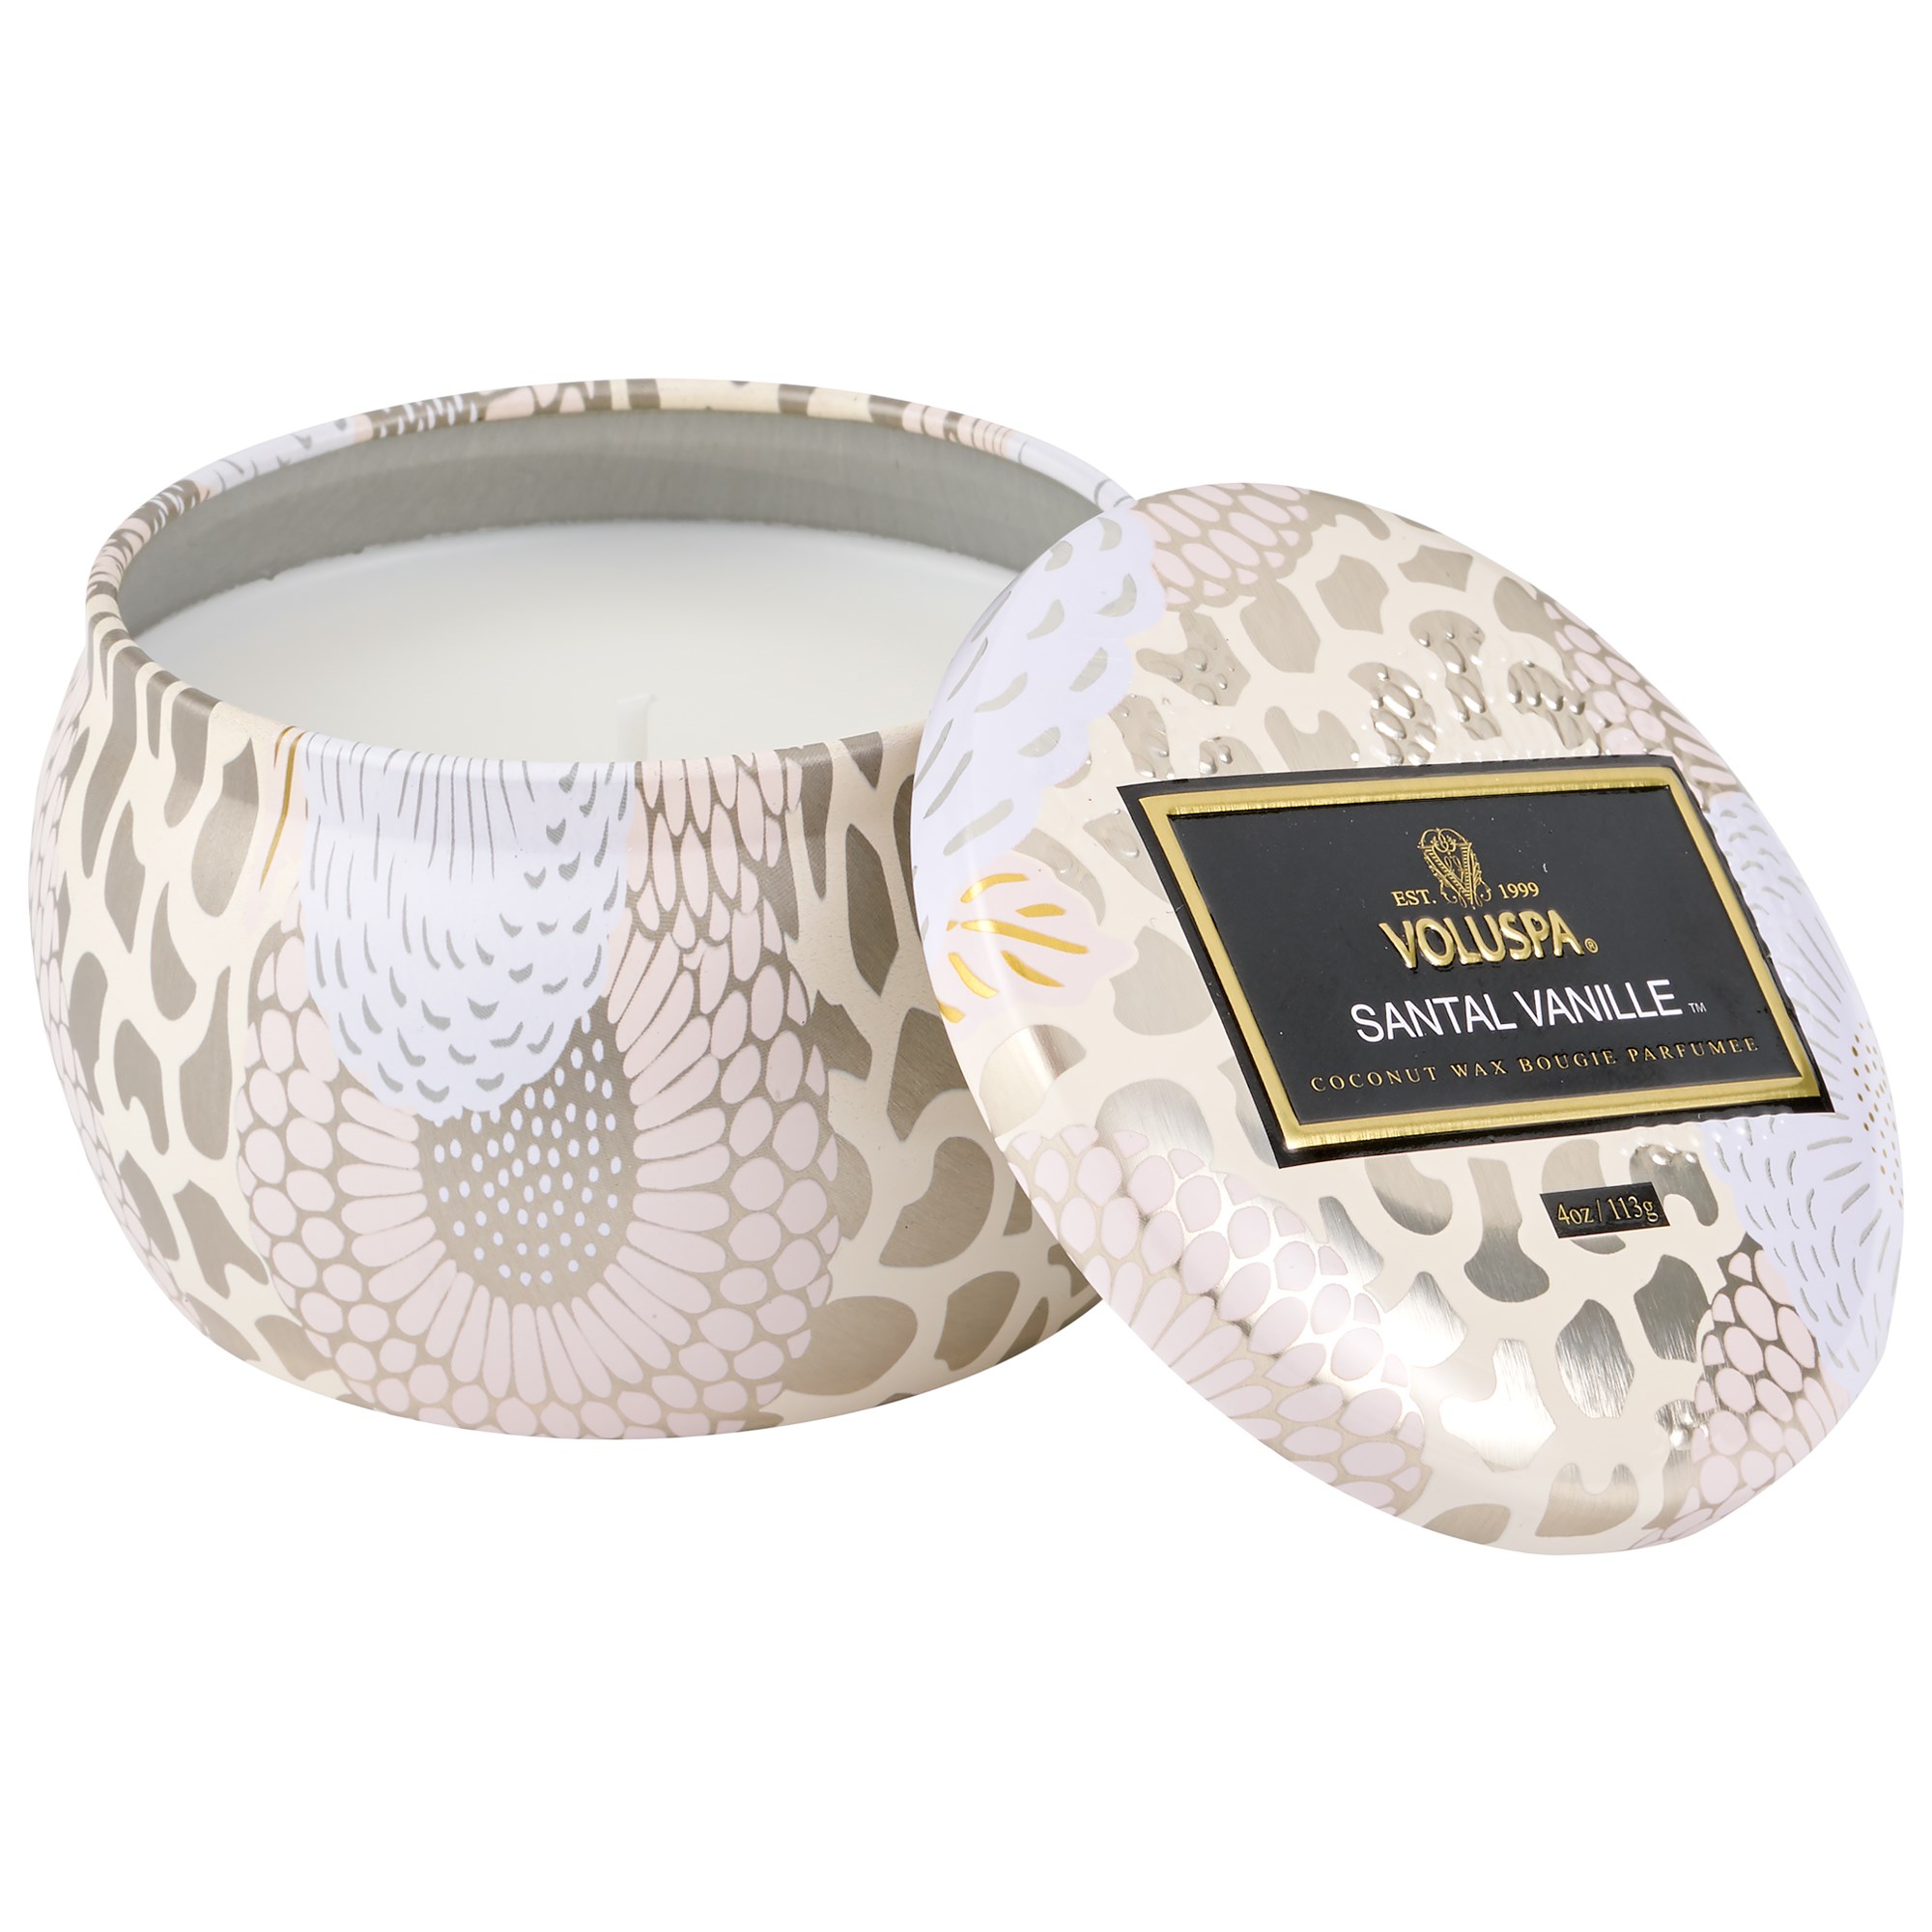 Voluspa Santal Vanille Japonica Decorative Tin Candle 25h